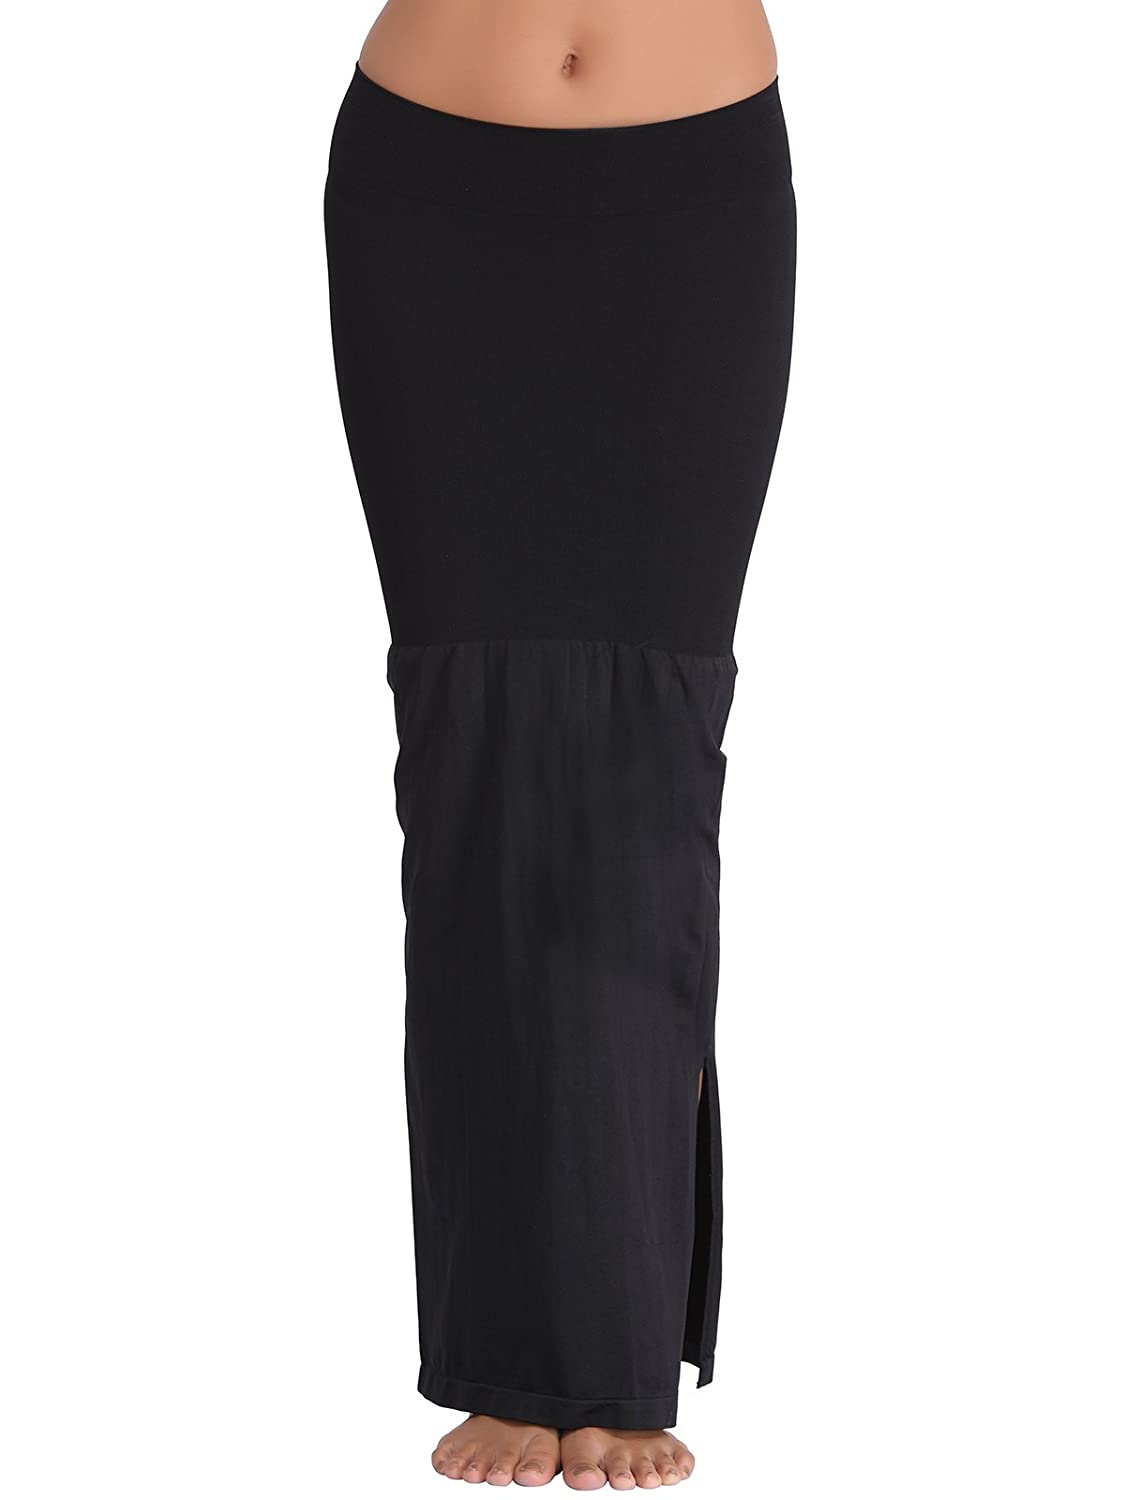 Clovia Women's Saree Shapewear Black Color Petticoat